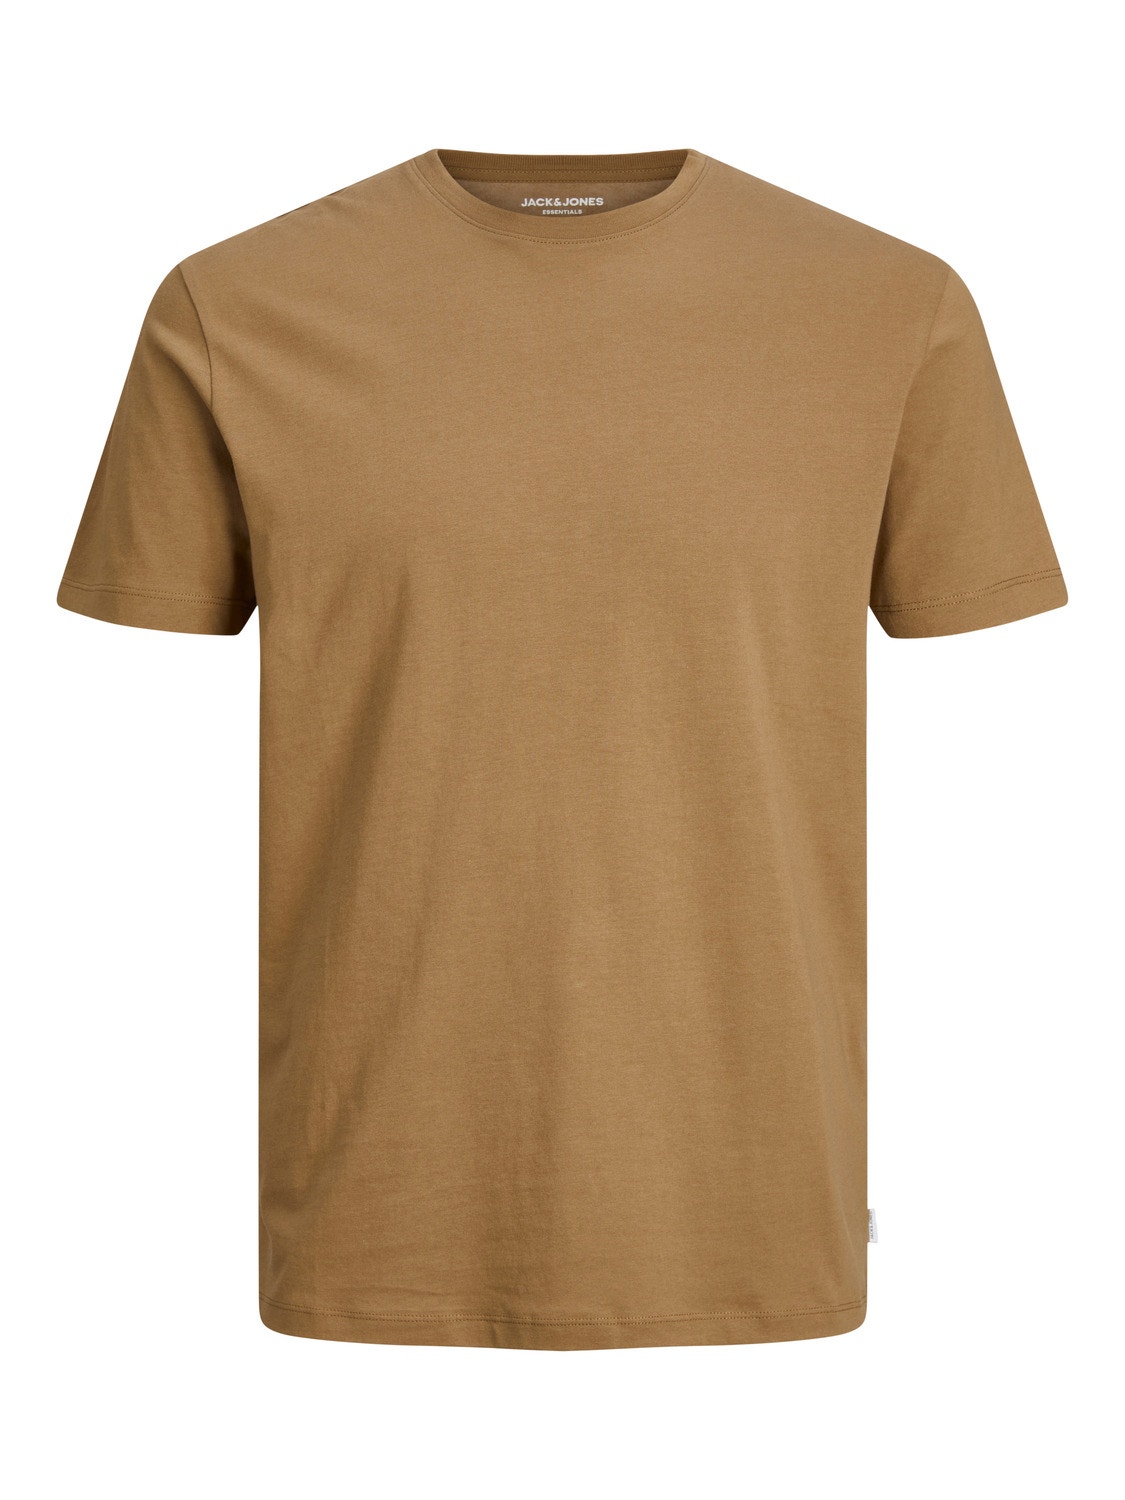 Jack & Jones Plain Crew neck T-shirt -Otter - 12156101